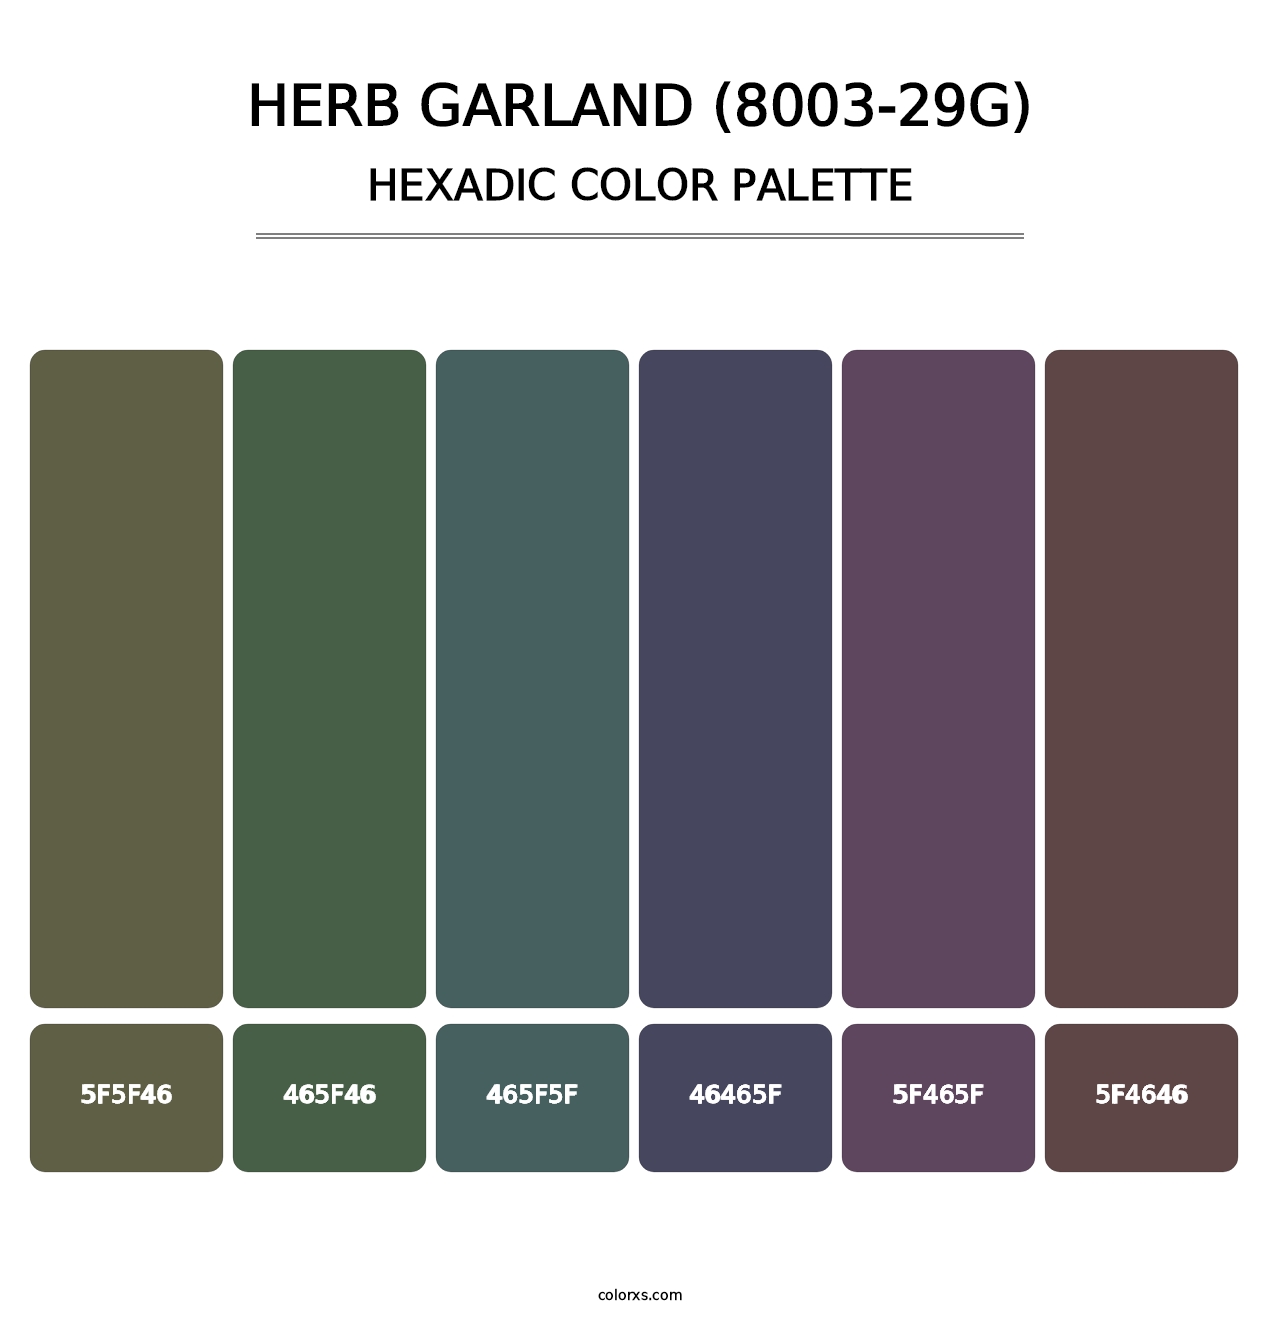 Herb Garland (8003-29G) - Hexadic Color Palette